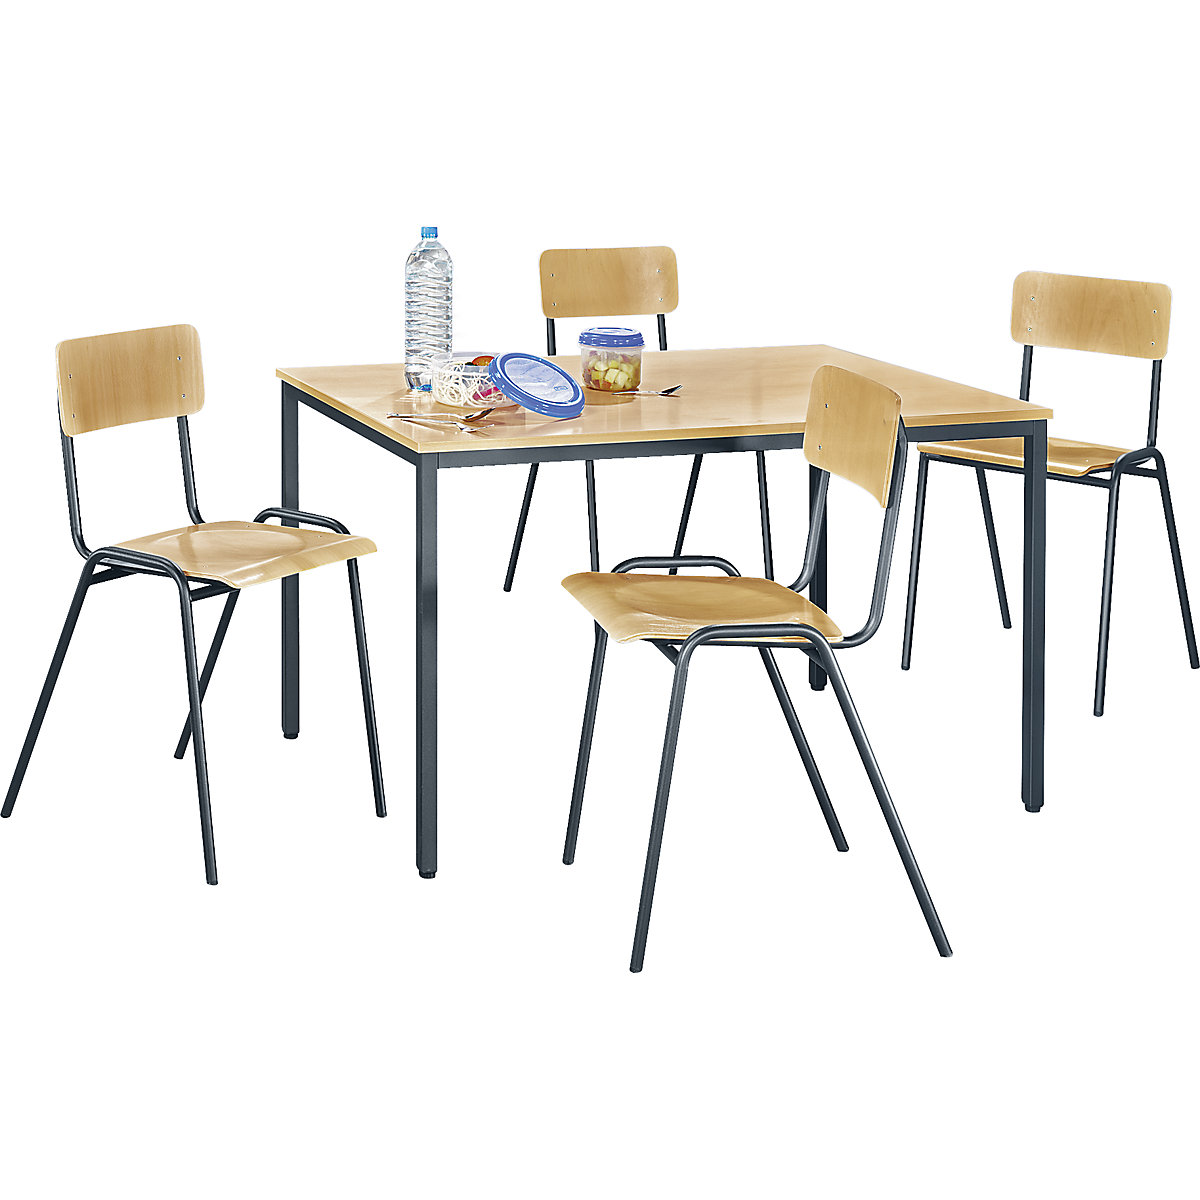 Multi-purpose seating unit – eurokraft basic, 1 table, 4 chairs, tabletop in beech finish, basalt grey frame-6